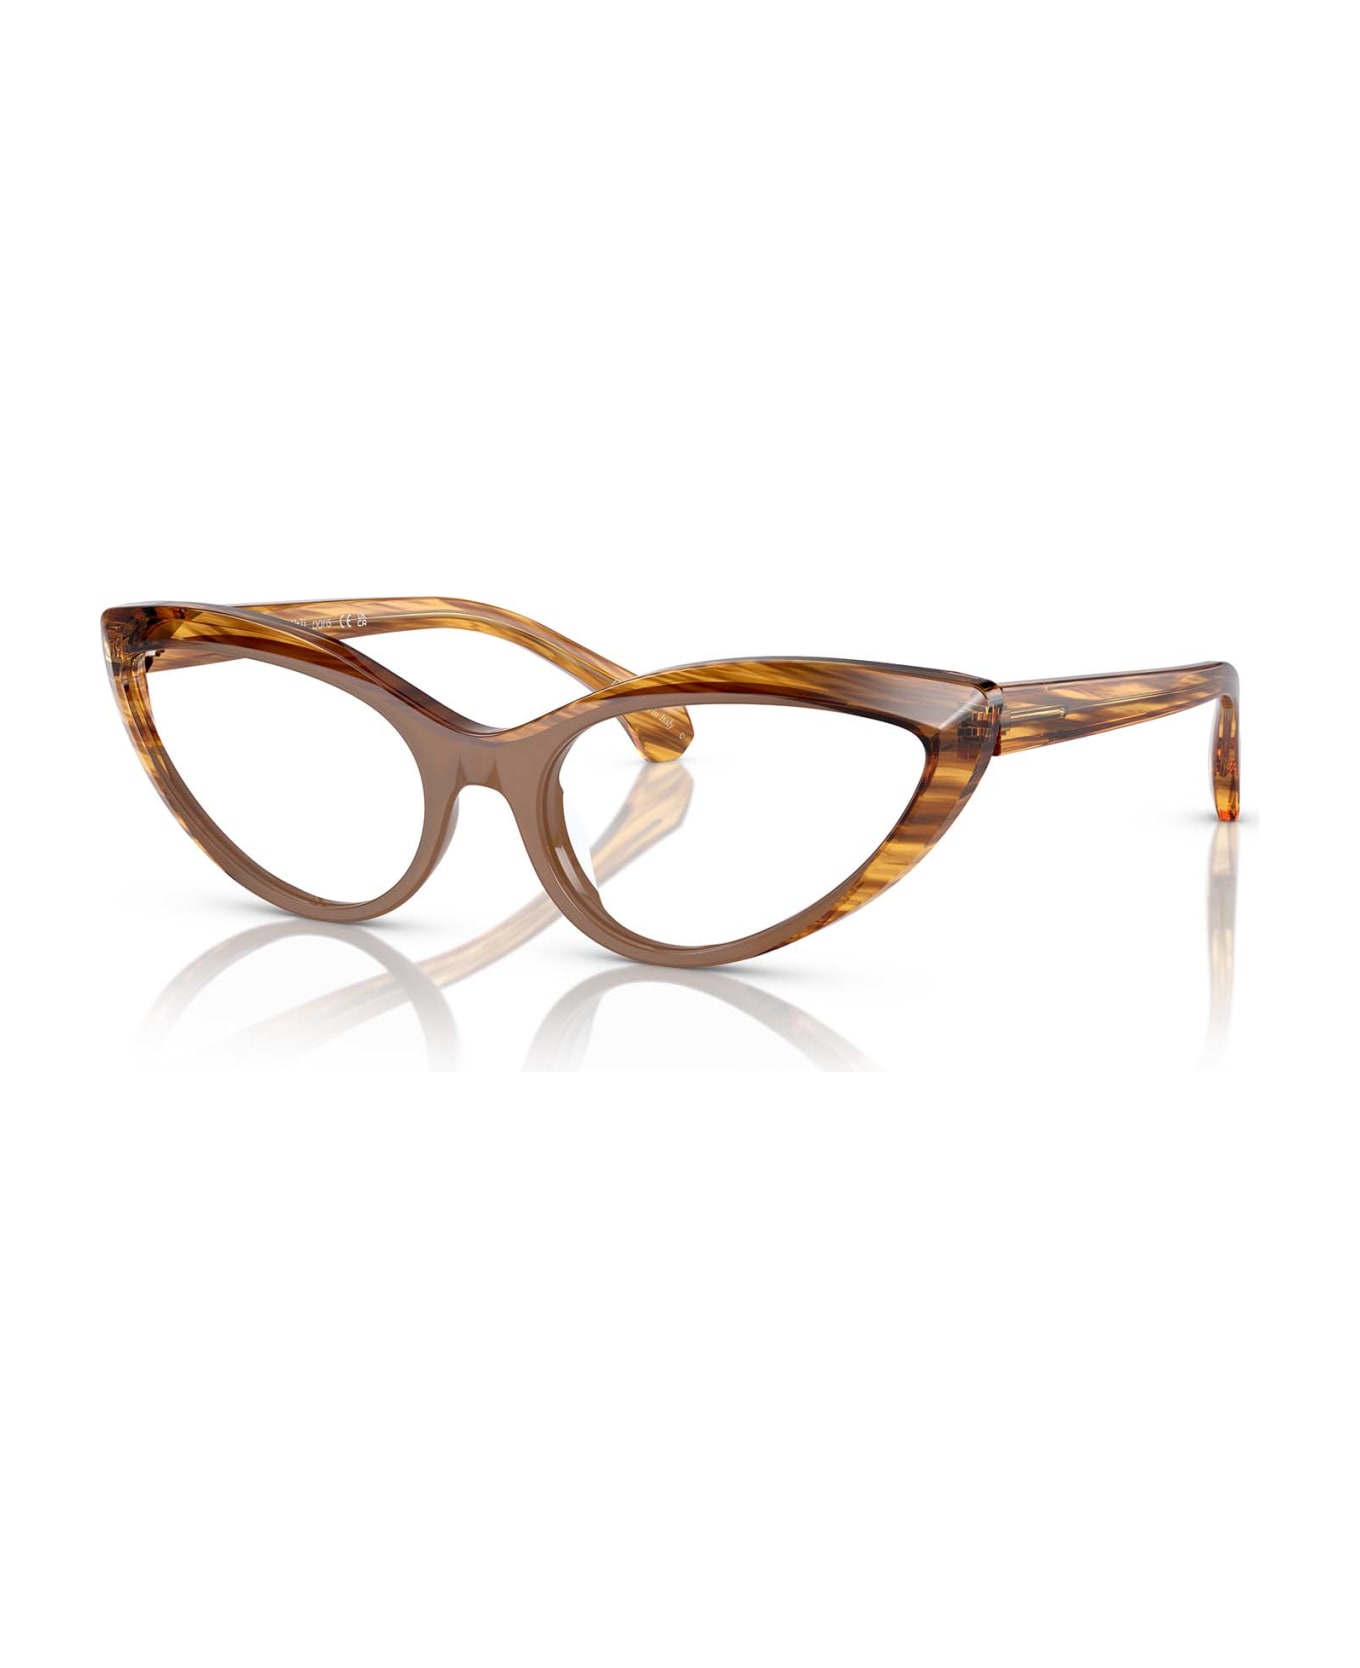 Alain Mikli A03503 Opal Brown/striped Havana Glasses - Opal Brown/Striped Havana